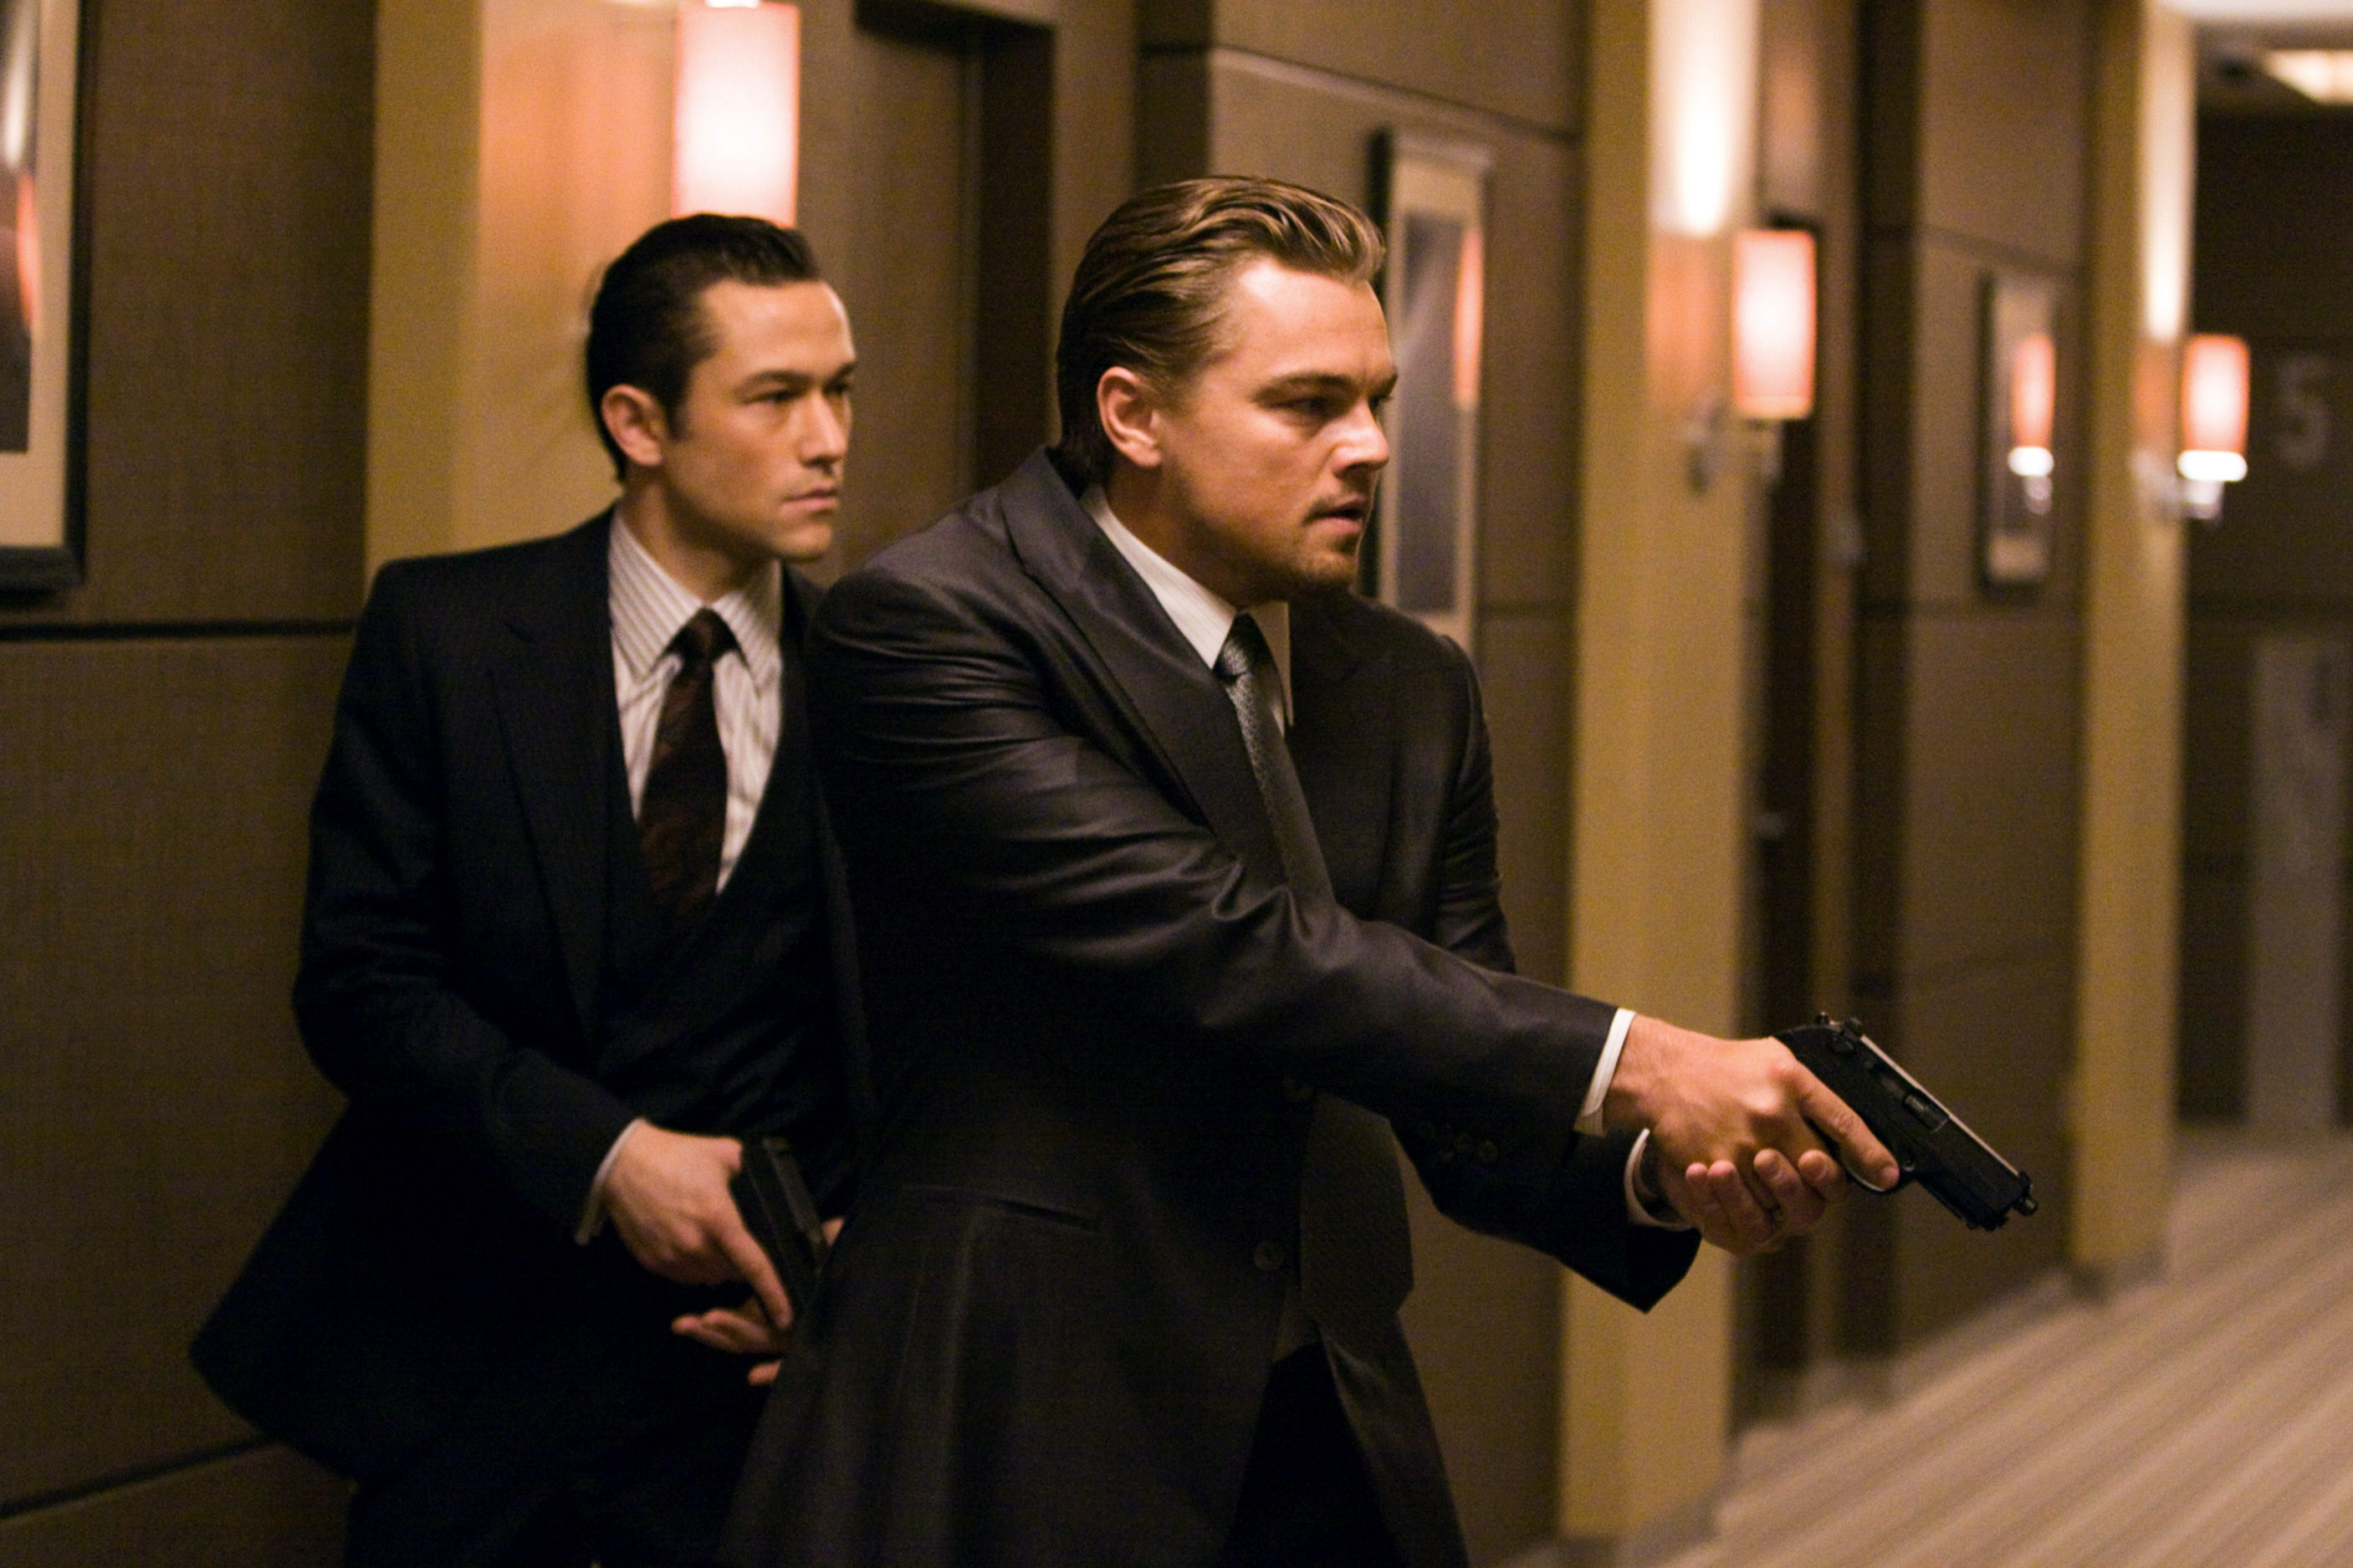 Joseph Gordon-Levitt and Leonardo DiCaprio walk down a hallway with guns